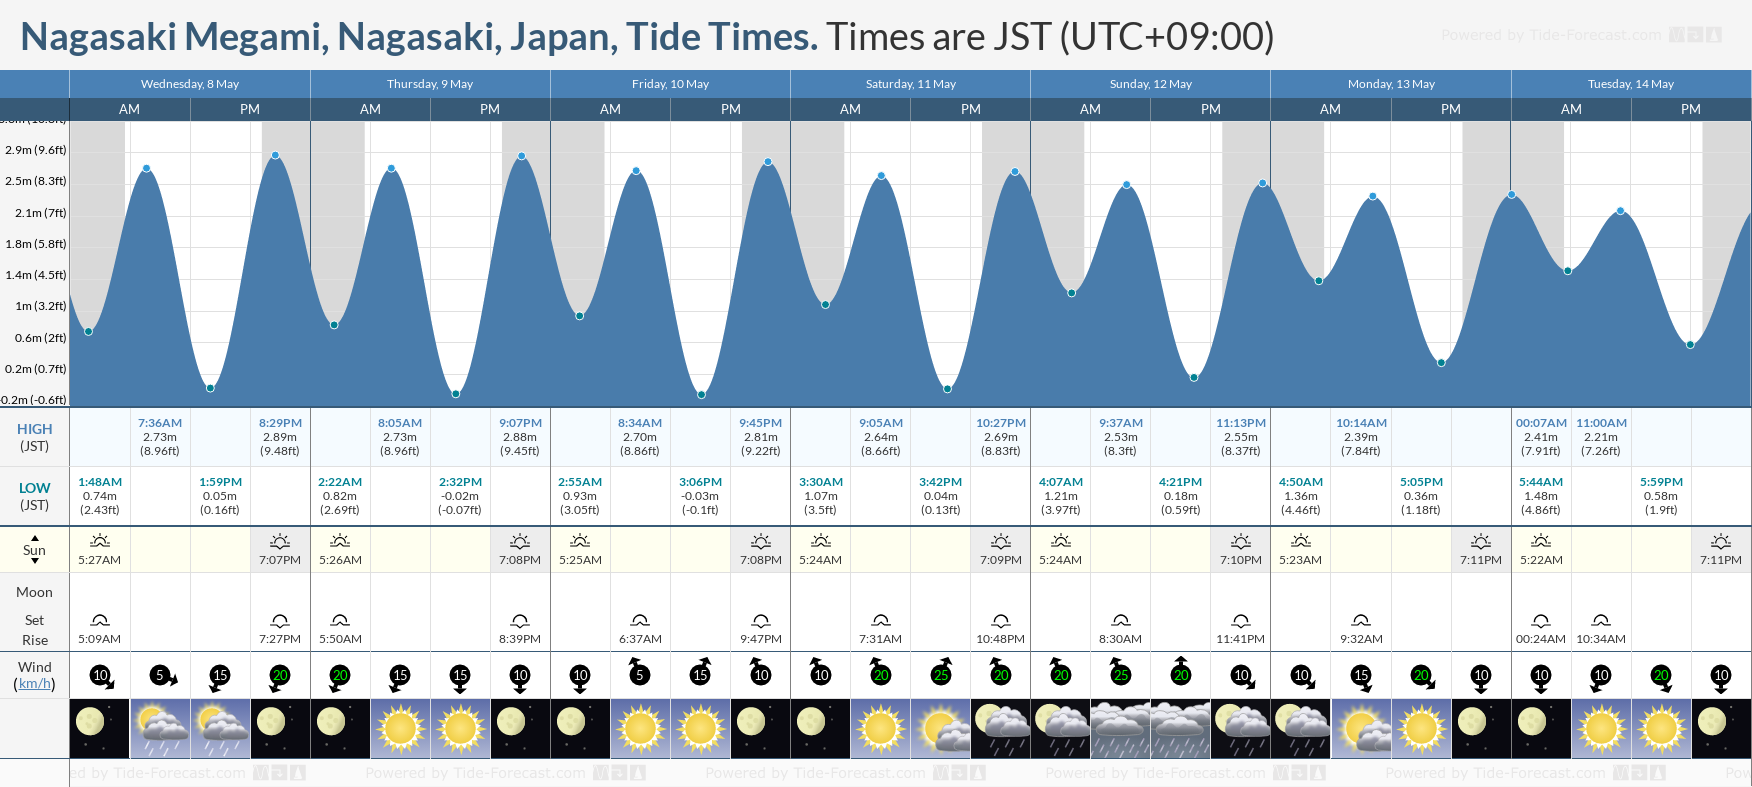 Nagasaki Megami, Nagasaki, Japan Tide Chart including high and low tide times for the next 7 days